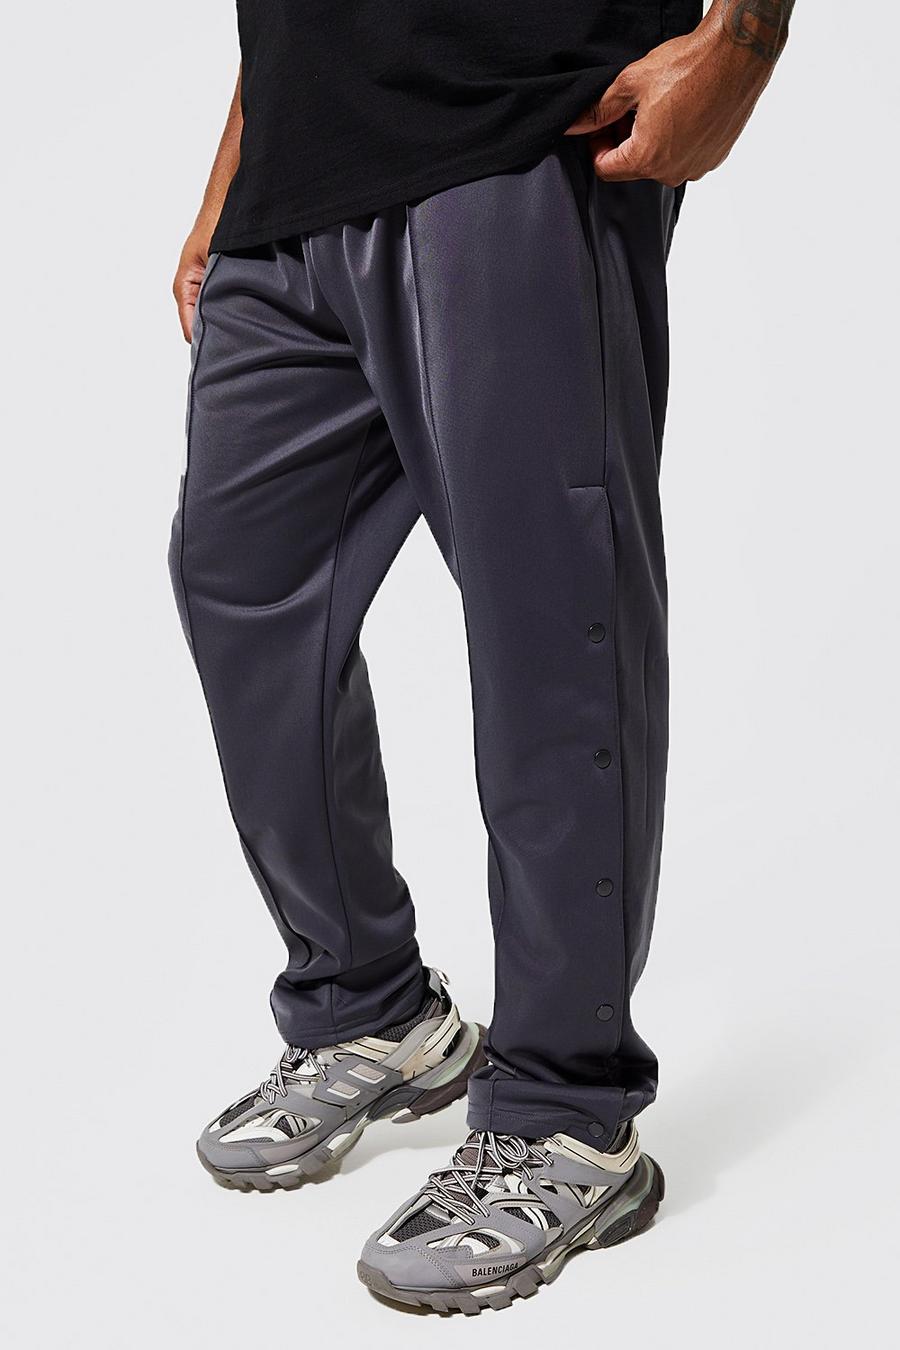 Pantalón deportivo Plus Regular de tejido por urdimbre con botones de presión, Charcoal gris